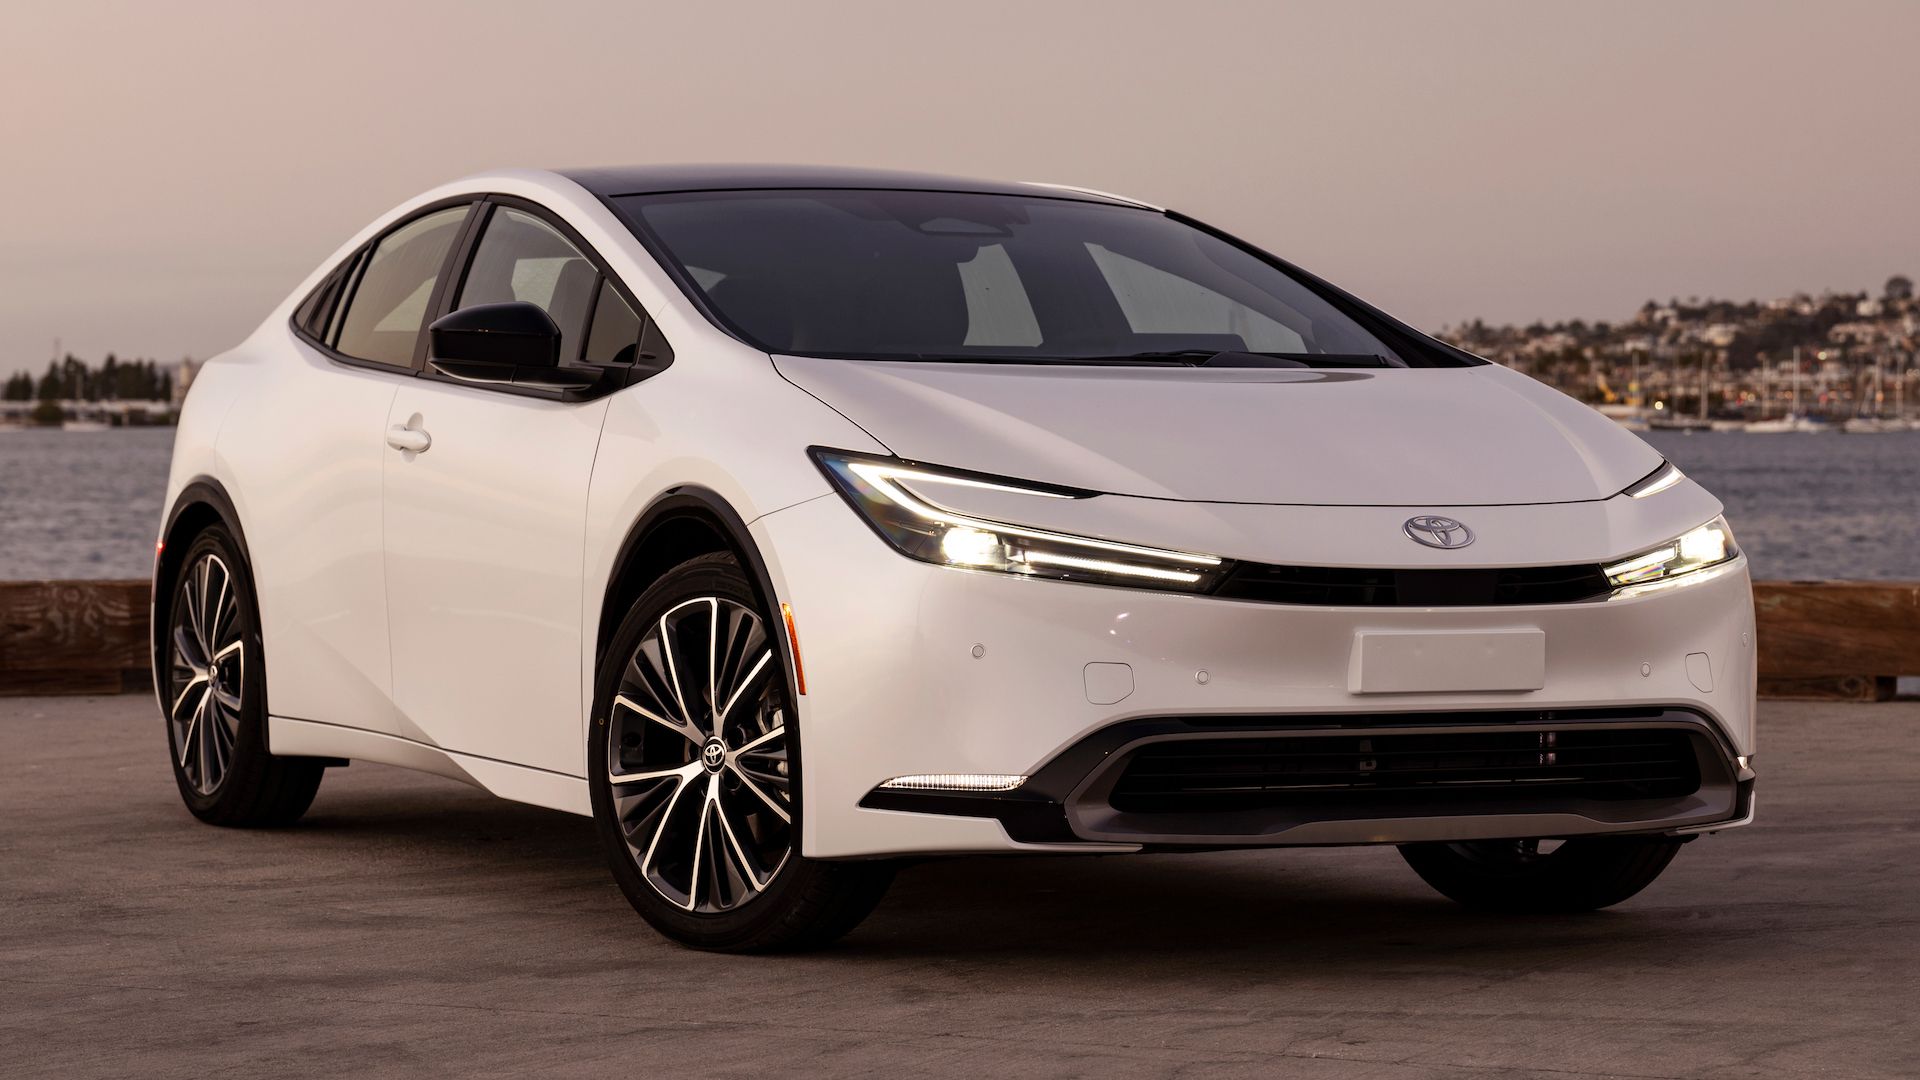 Toyota Hybrid 5th Generation: Design, Performance & More